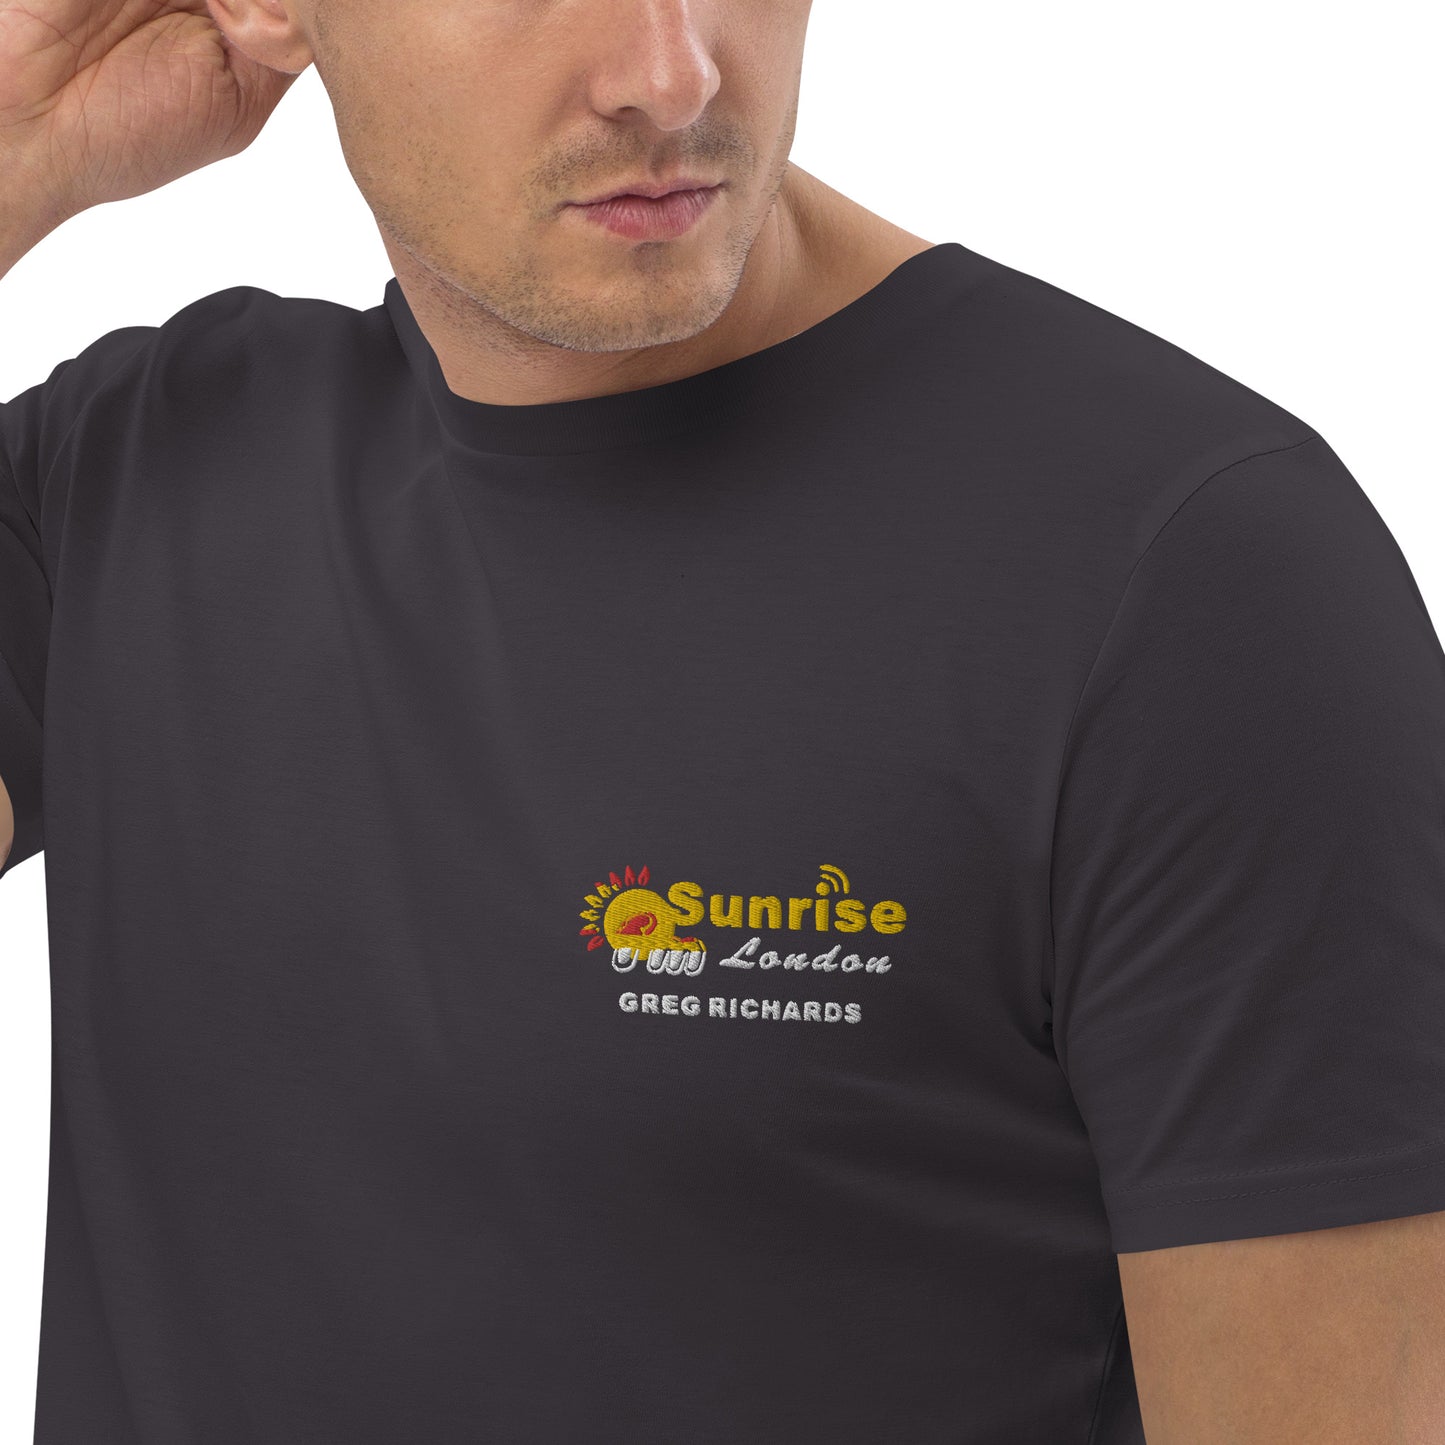 Unisex Cotton T-Shirt (Greg Richards)